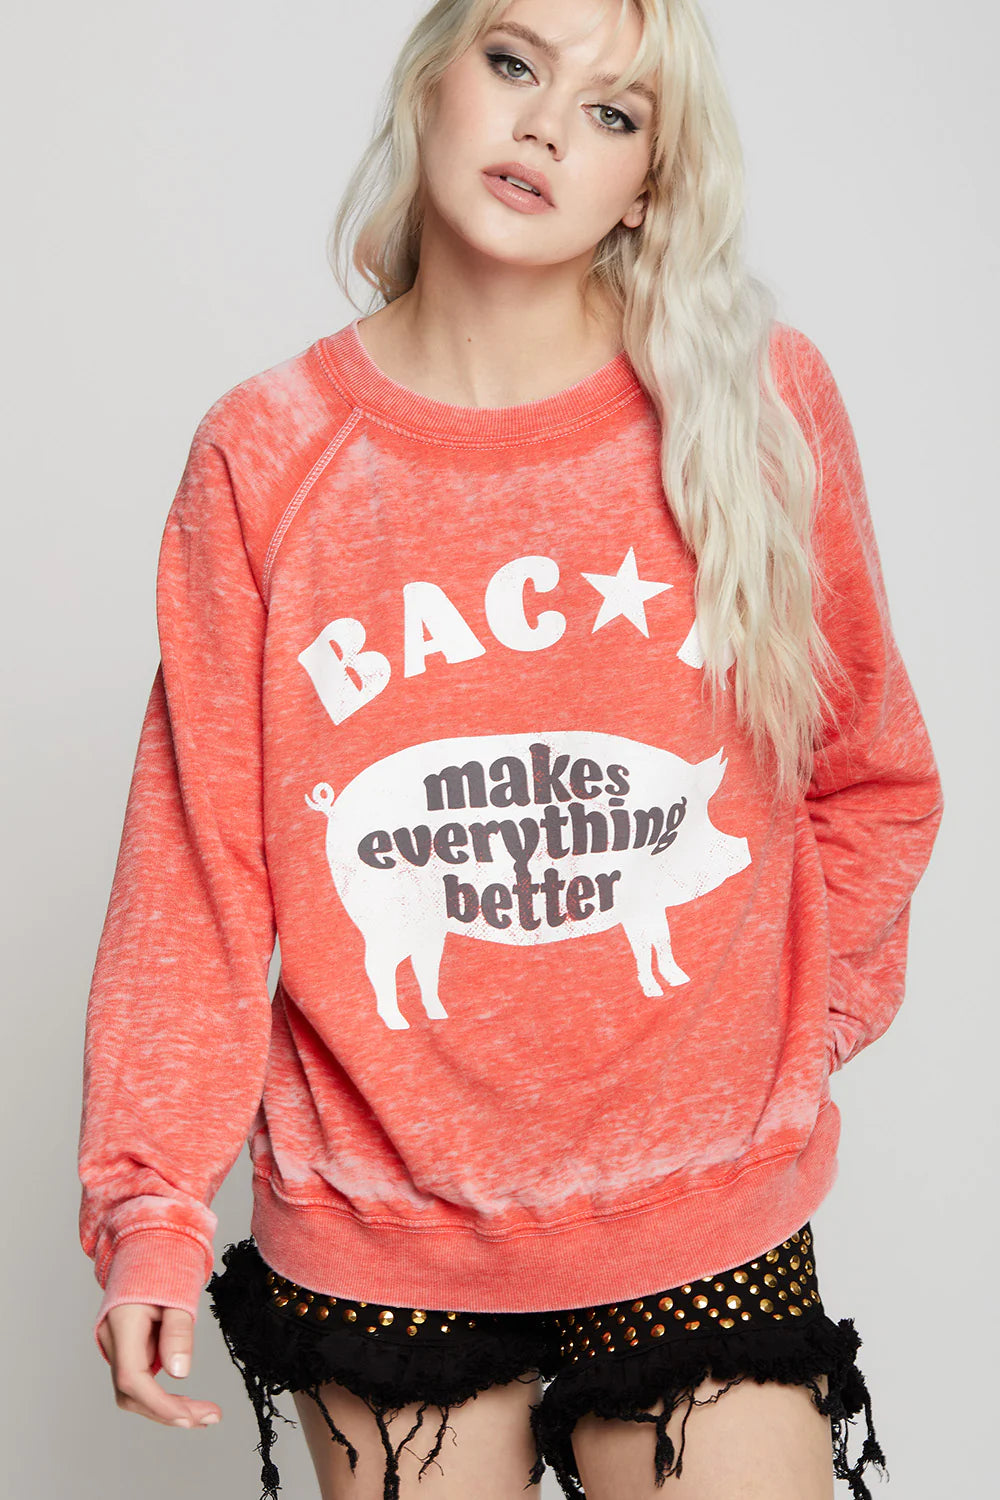 Bacon Makes Everything Better Sweatshirt